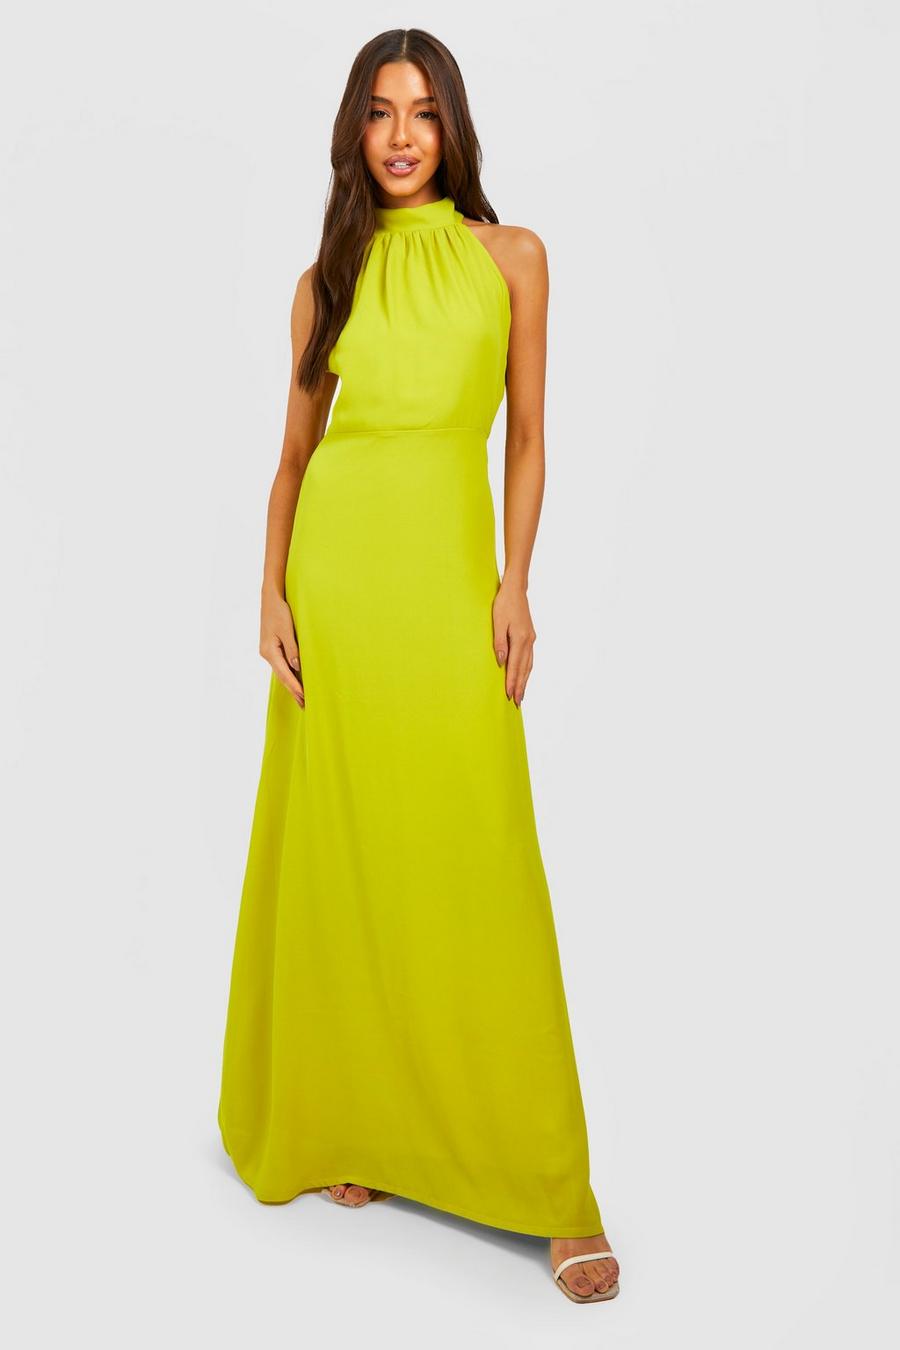 Chartreuse yellow Chiffon Halterneck Maxi Dress